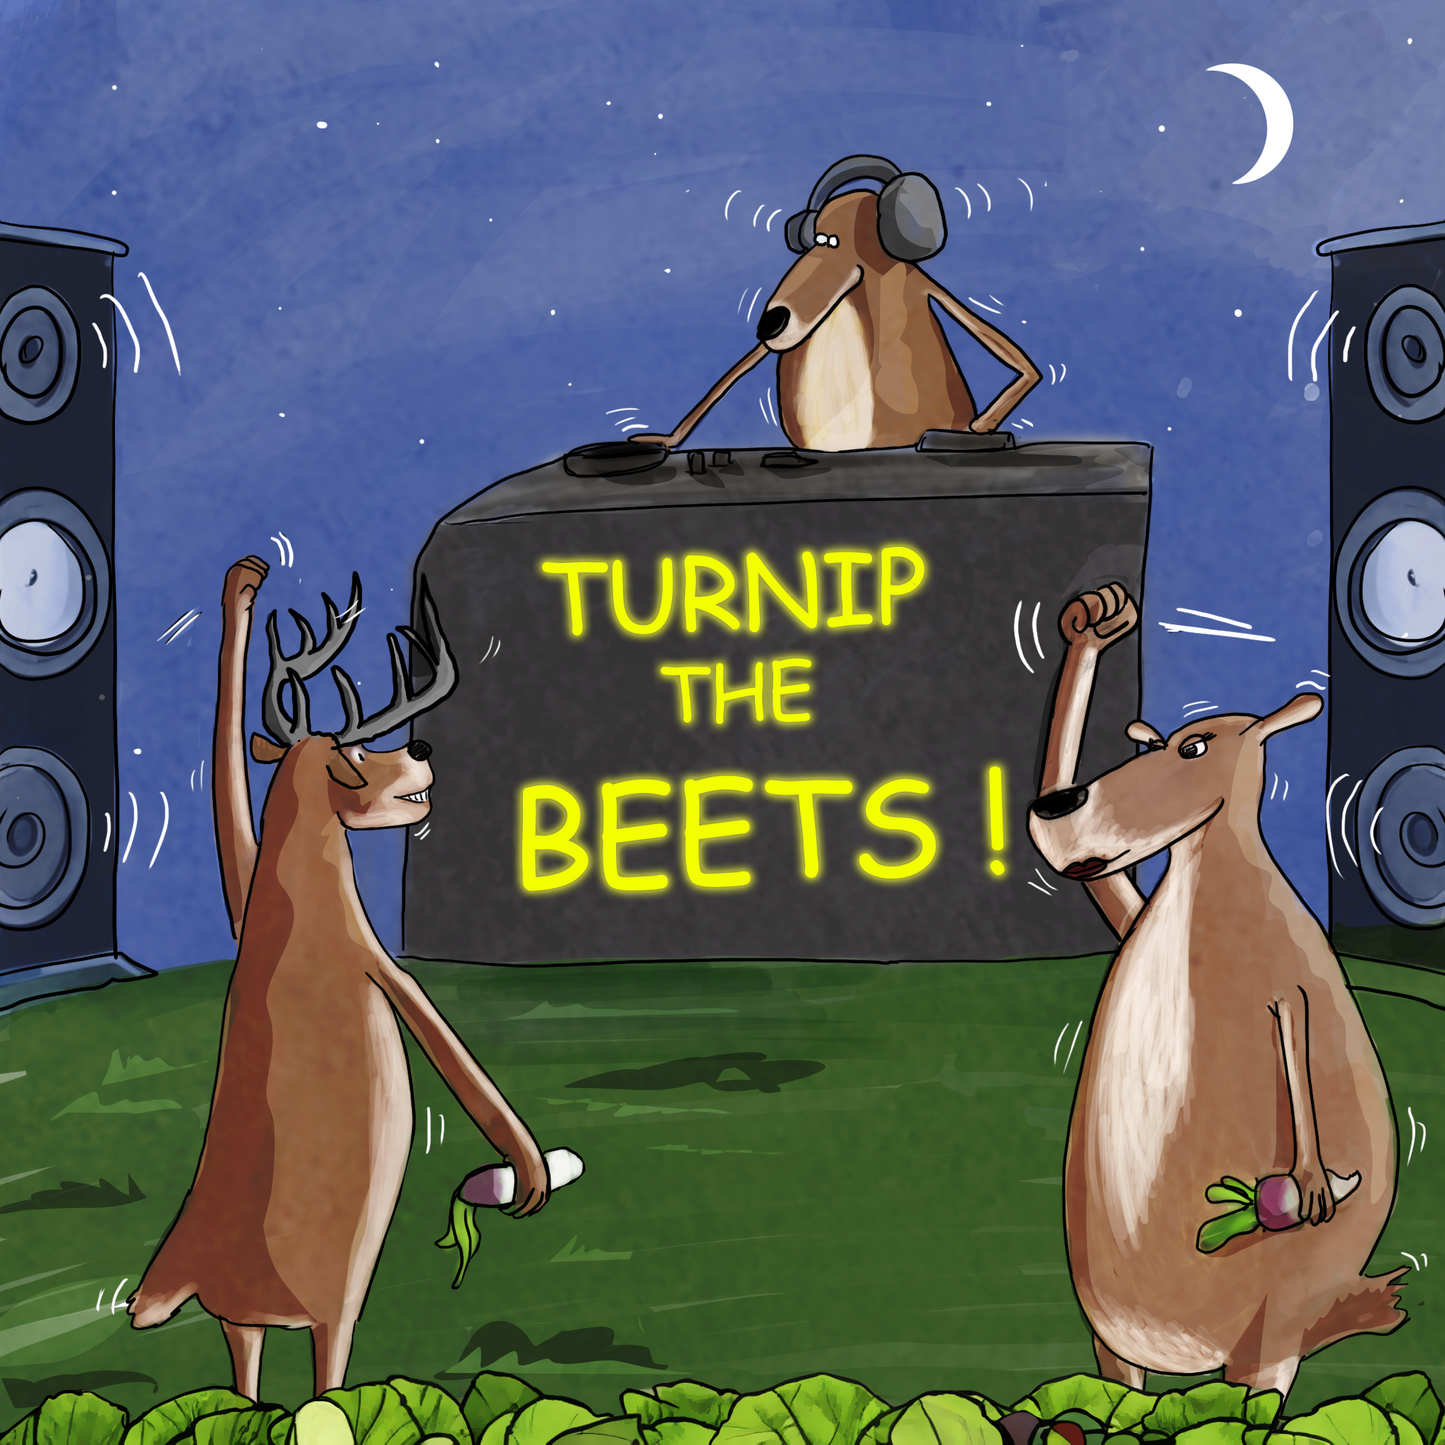 Turnip the Beets!